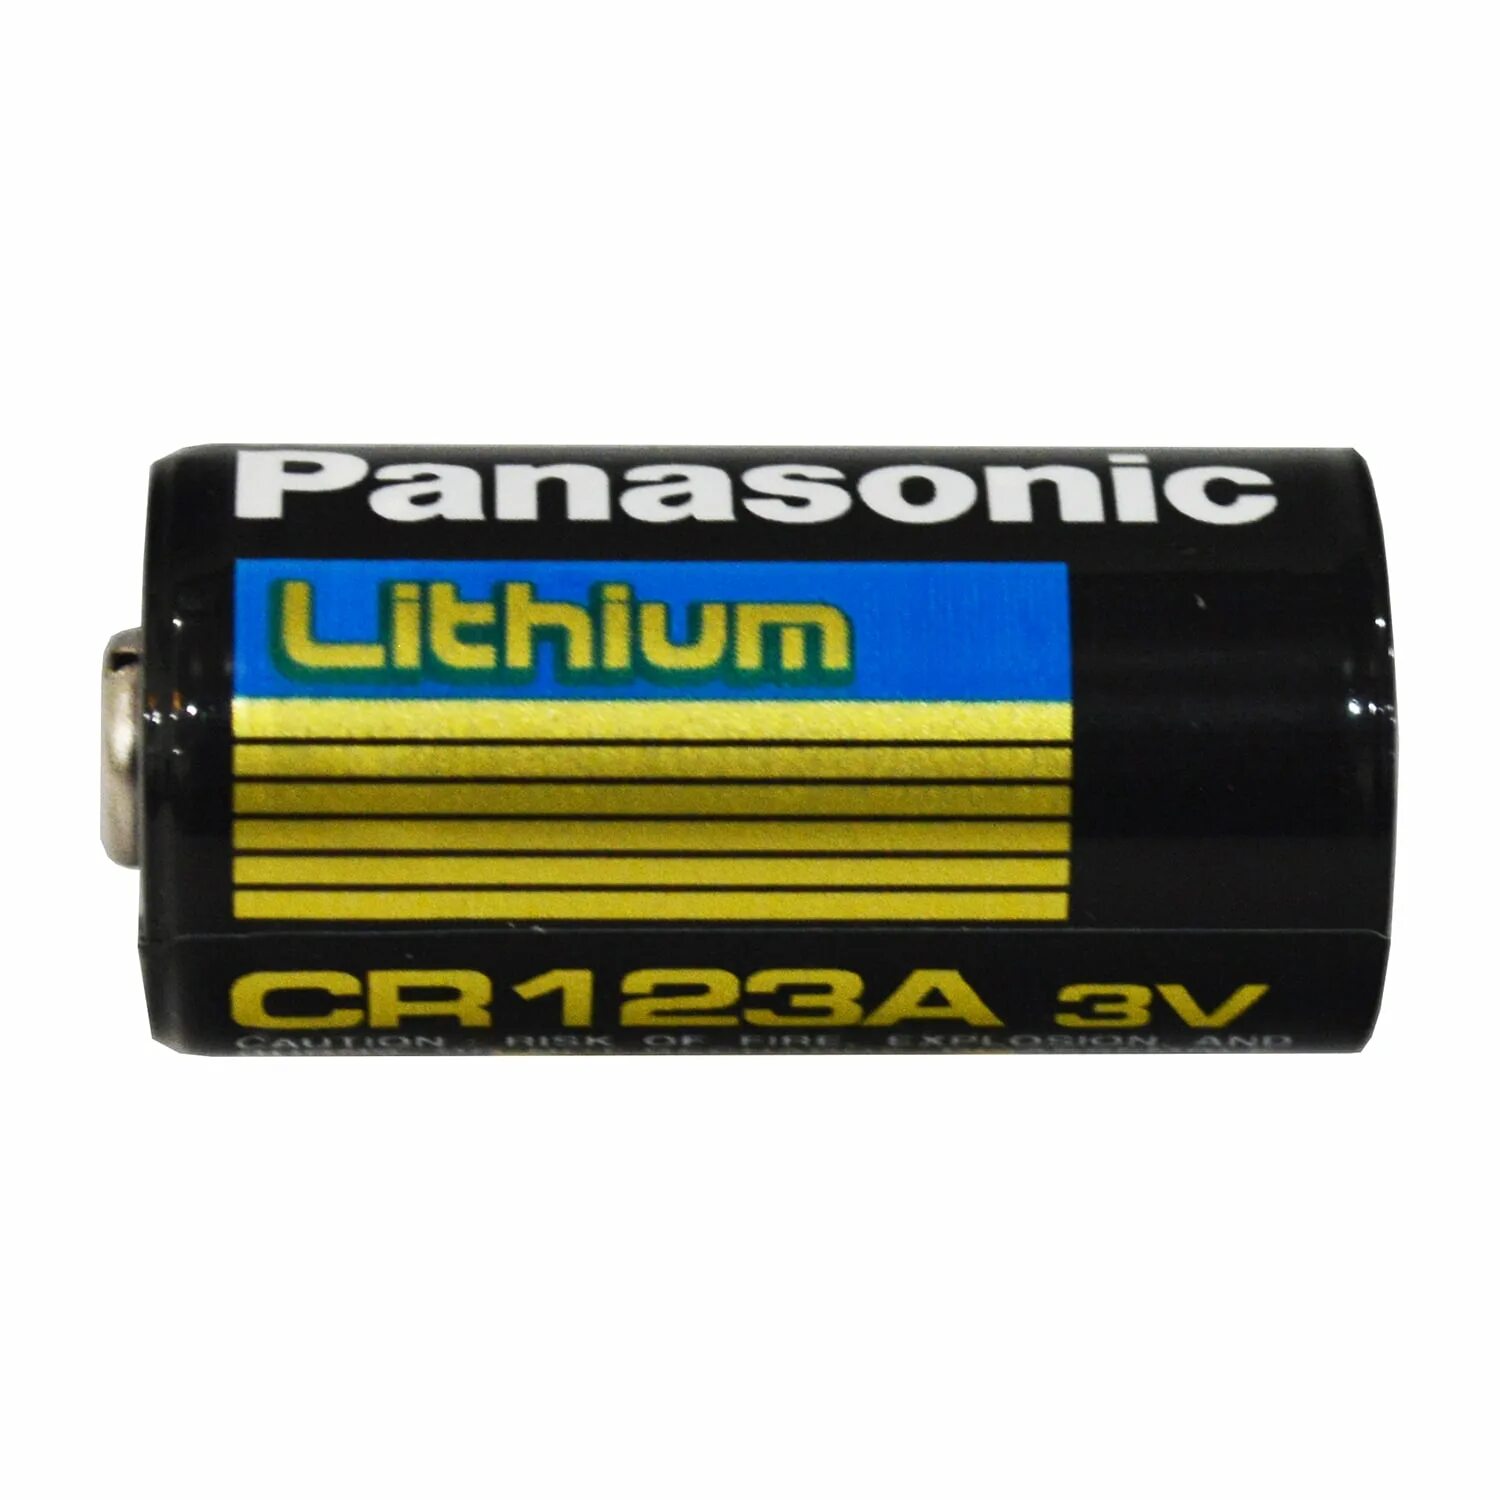 Cr123a батарейка купить. Cr123a батарейка Панасоник. Panasonic Lithium cr123a 3v cr17345. Panasonic CR-123 Lithium. Panasonic cr123a Industrial Lithium.